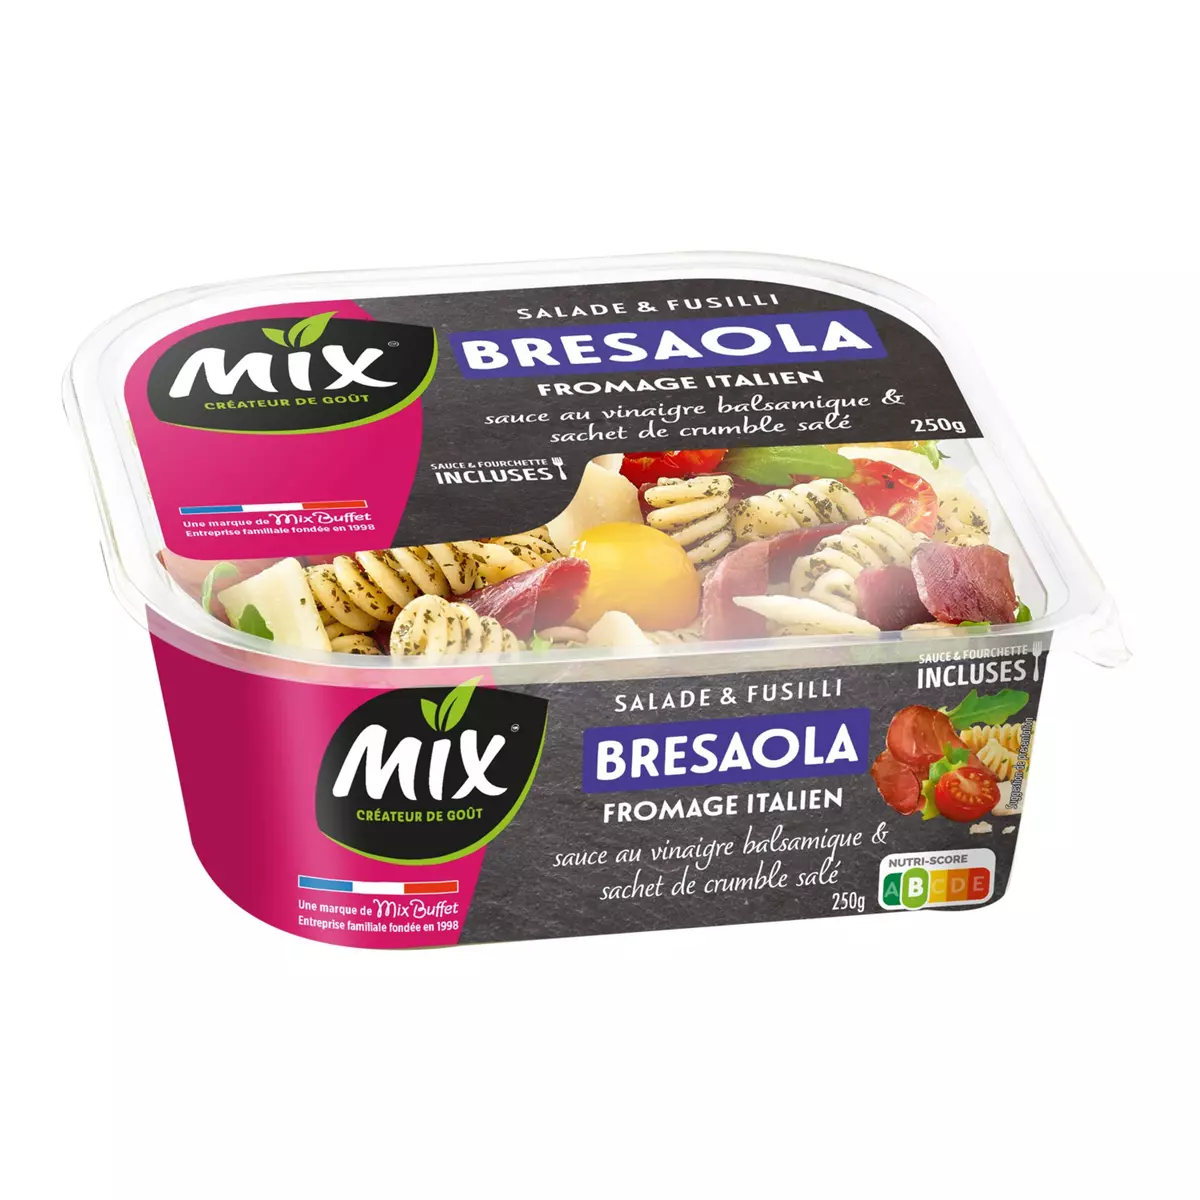 MIX Salade & fusilli bresaola fromage italien vinaigrette balsamique 1 portion 250g